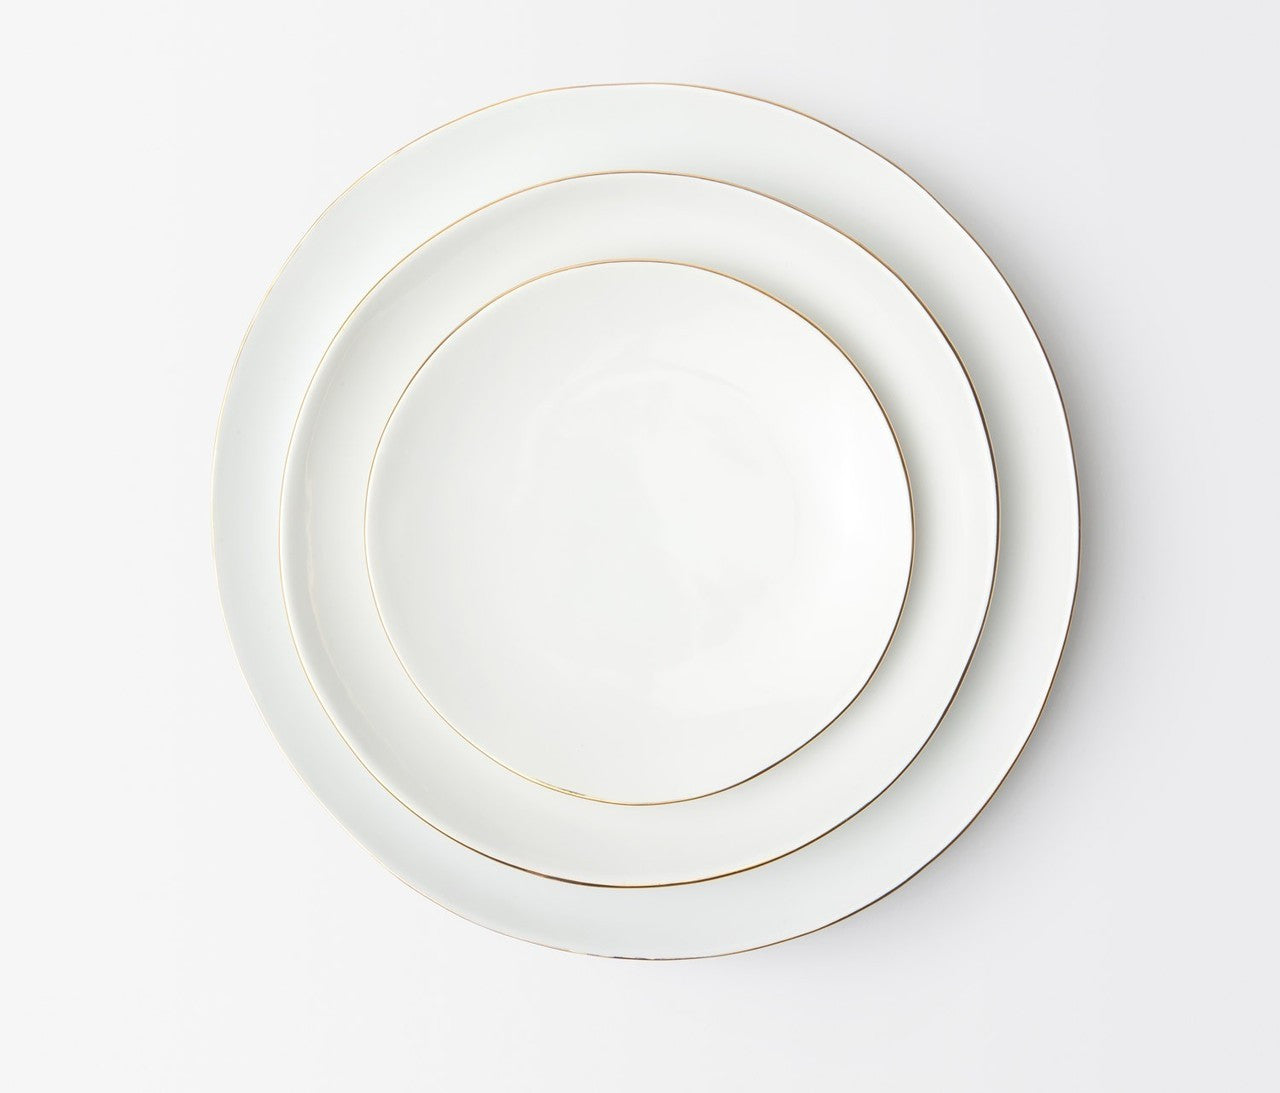 Julianna Dinner Plate - RSVP Style